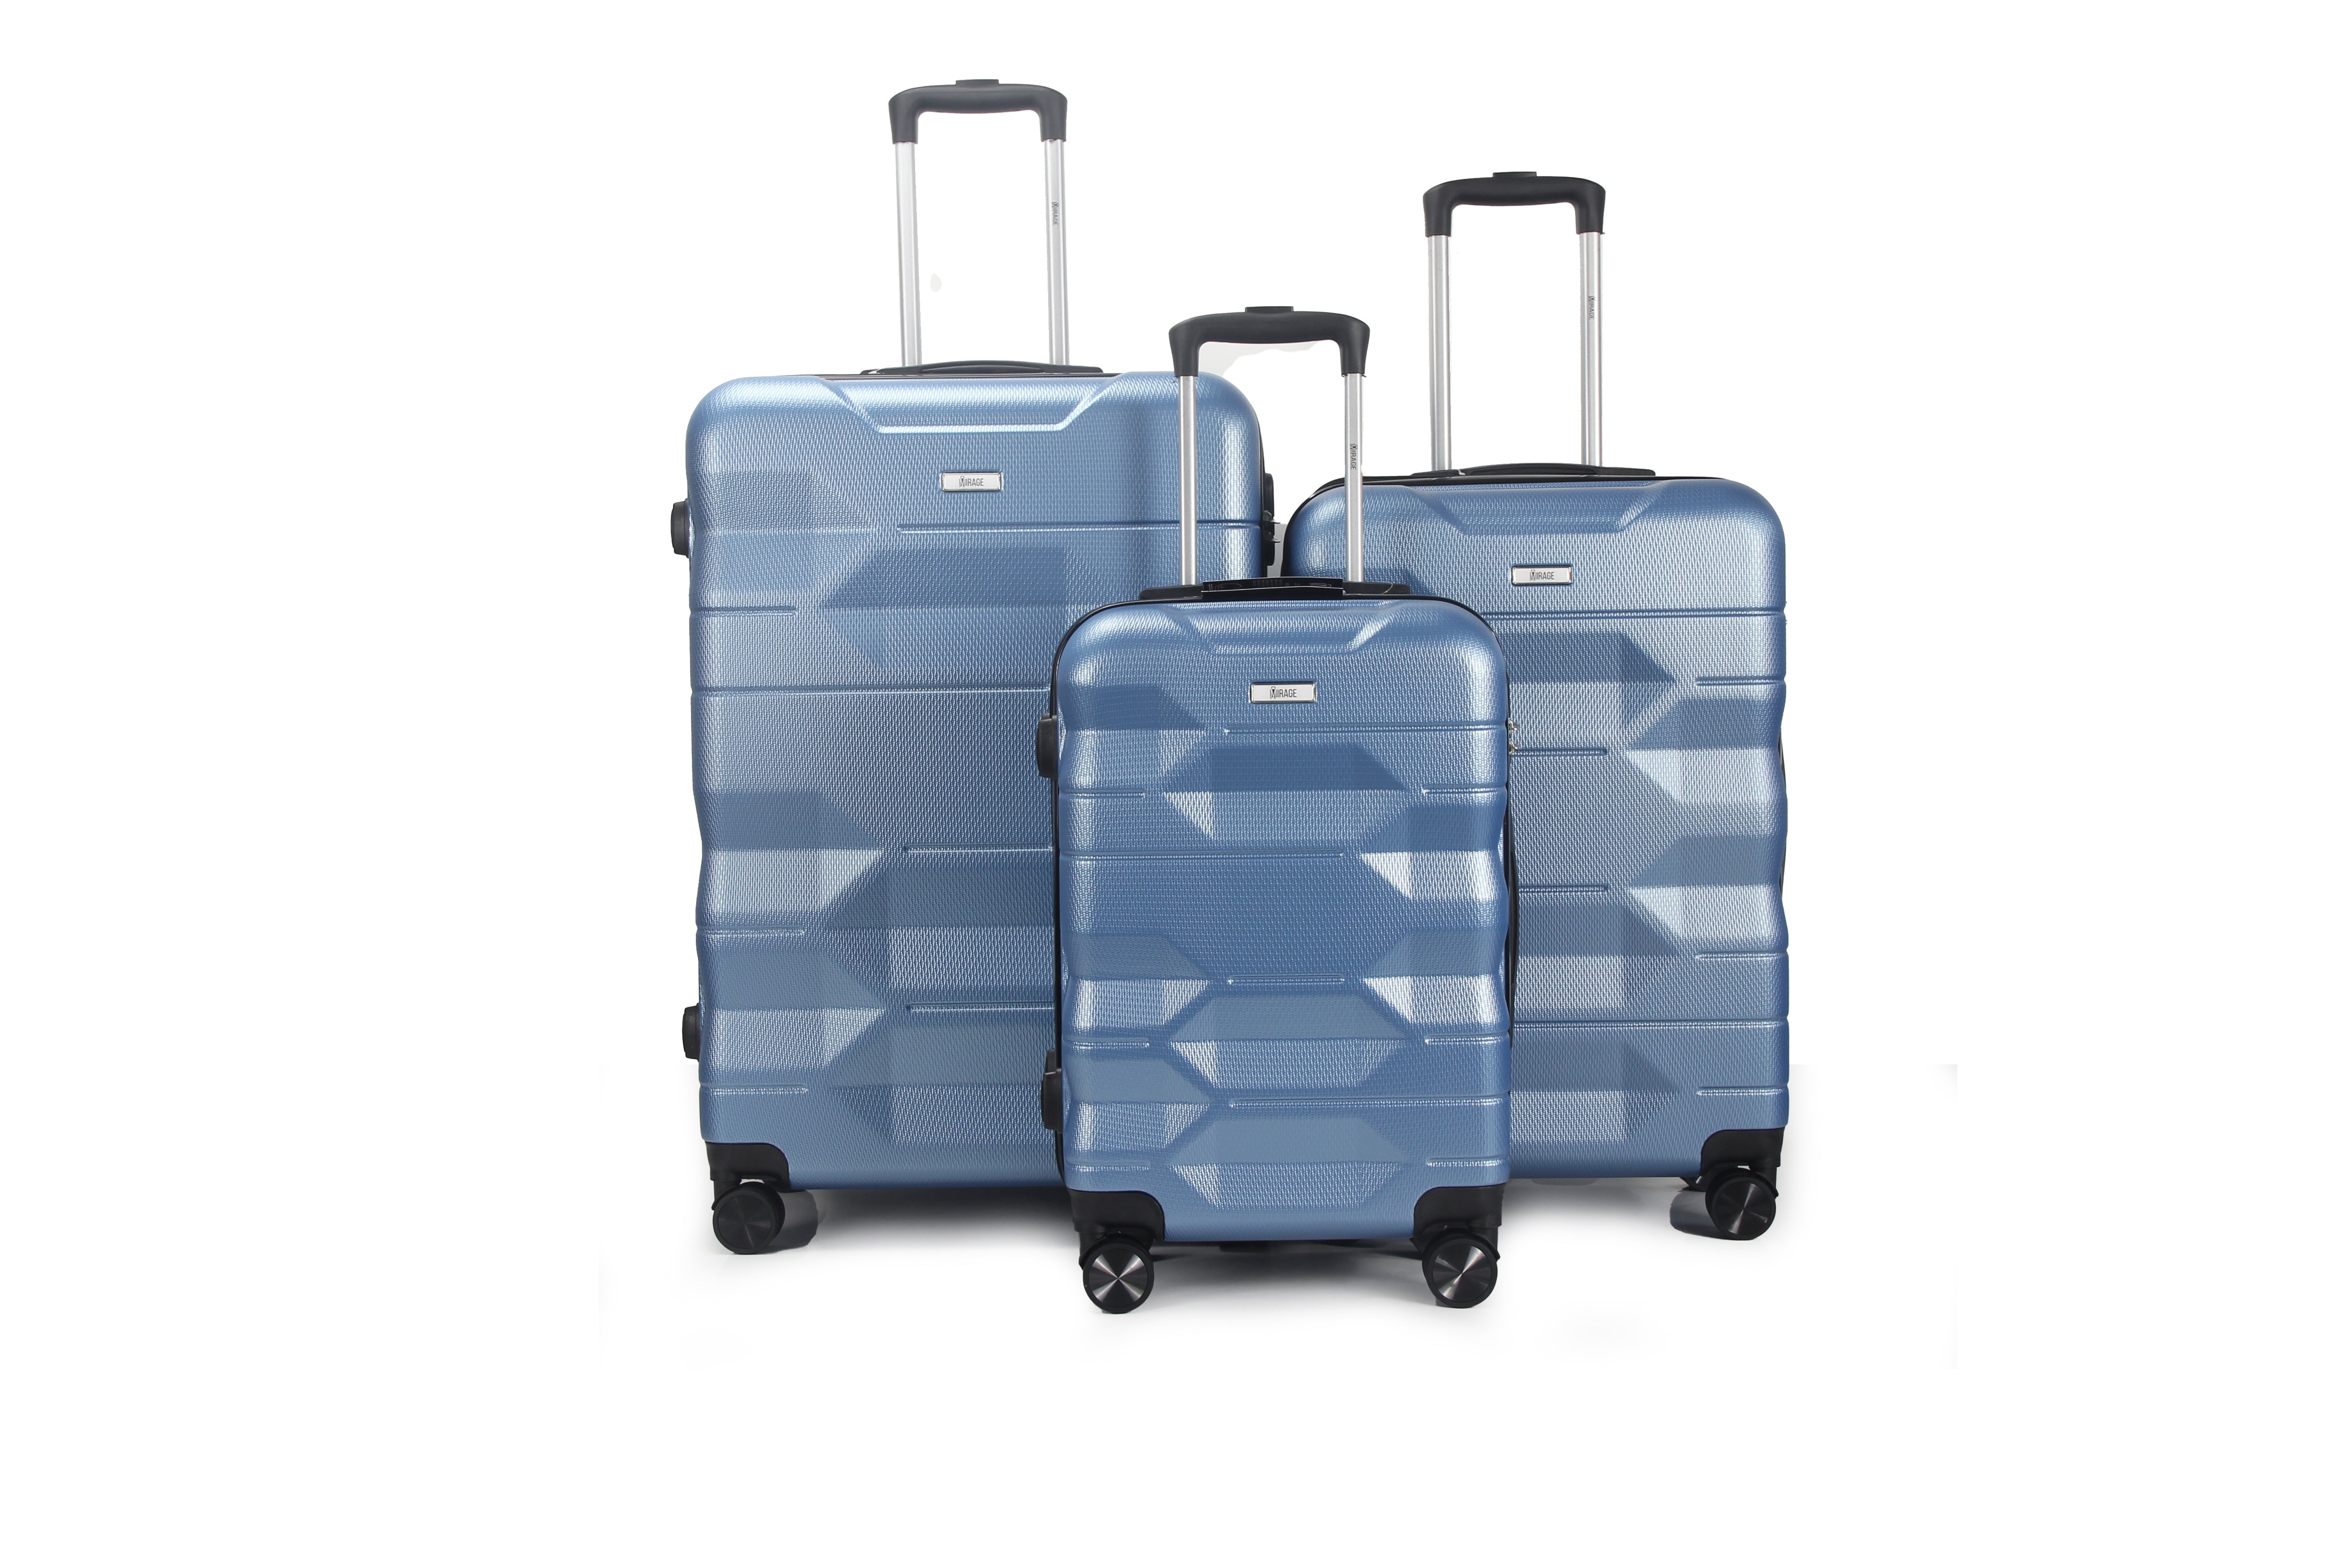 Best 3 Piece Luggage Set: Your Travel Companion – MIRAGELUGGAGE